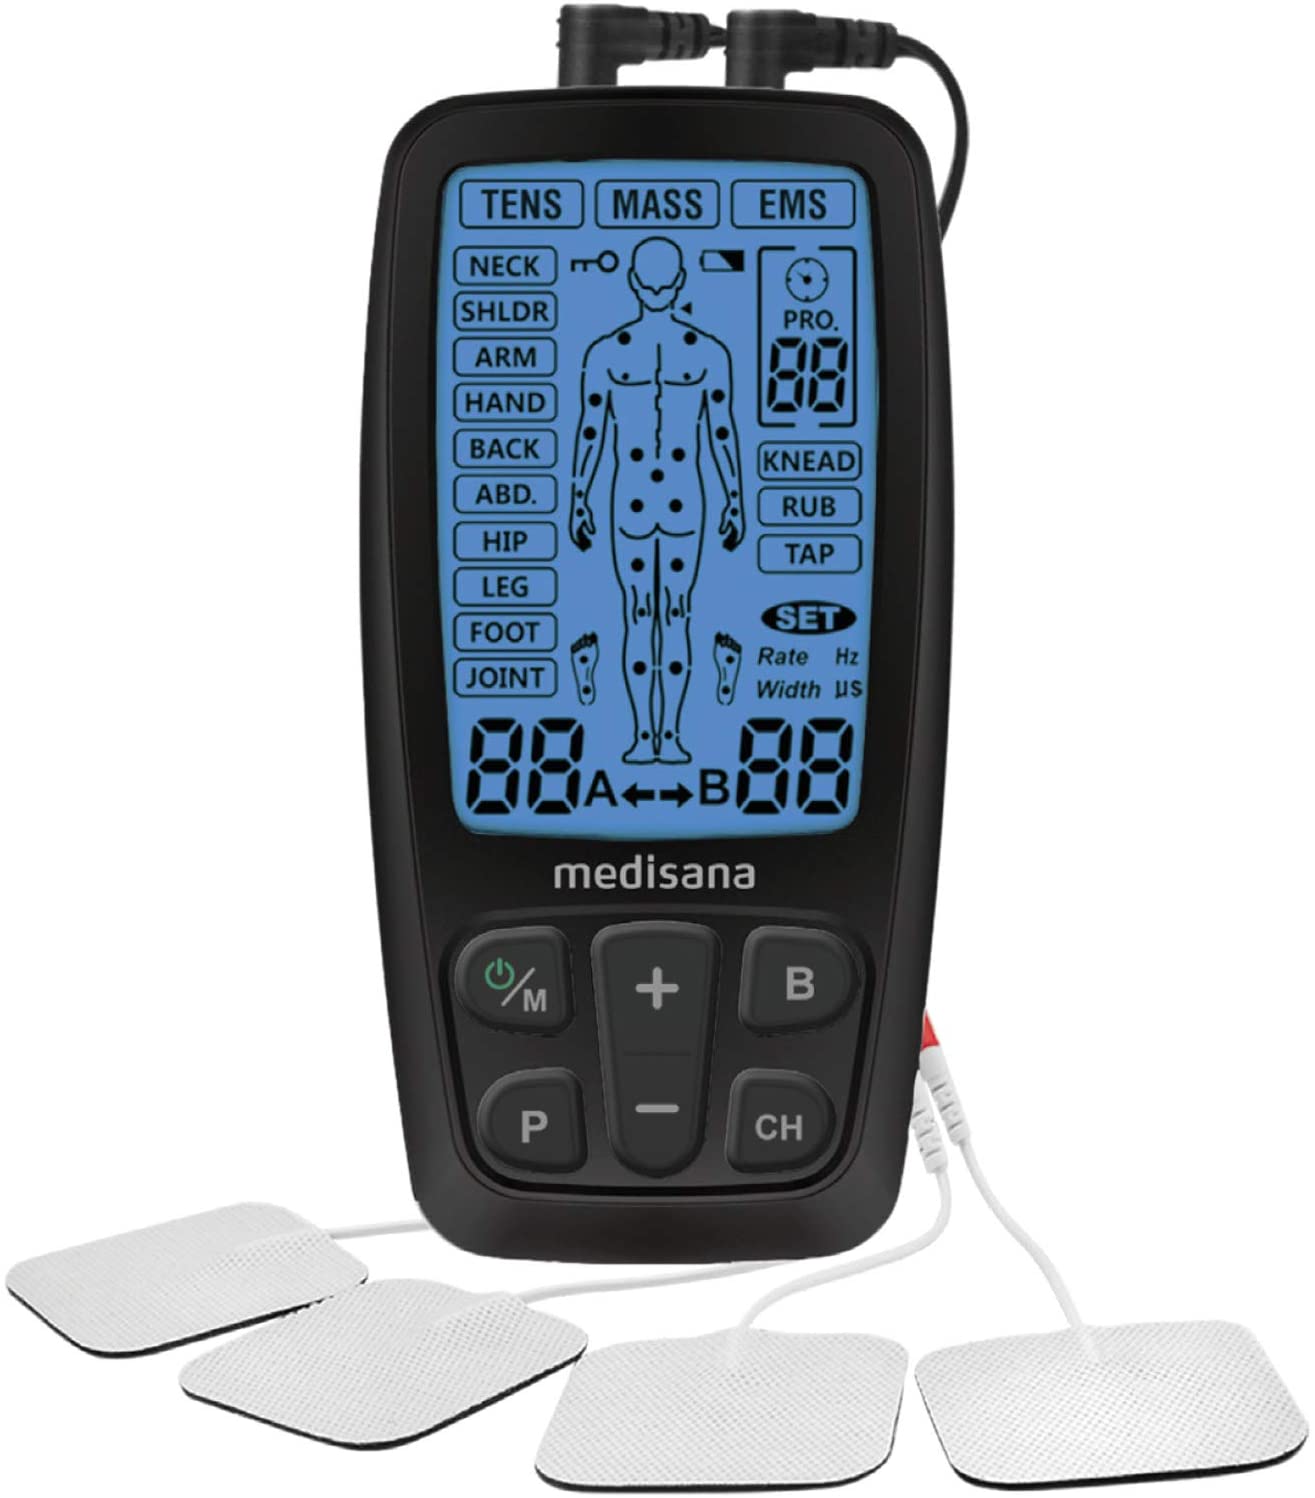 Medisana Tens Device, Ems Stimulation Device With 60 Programmes, Profession